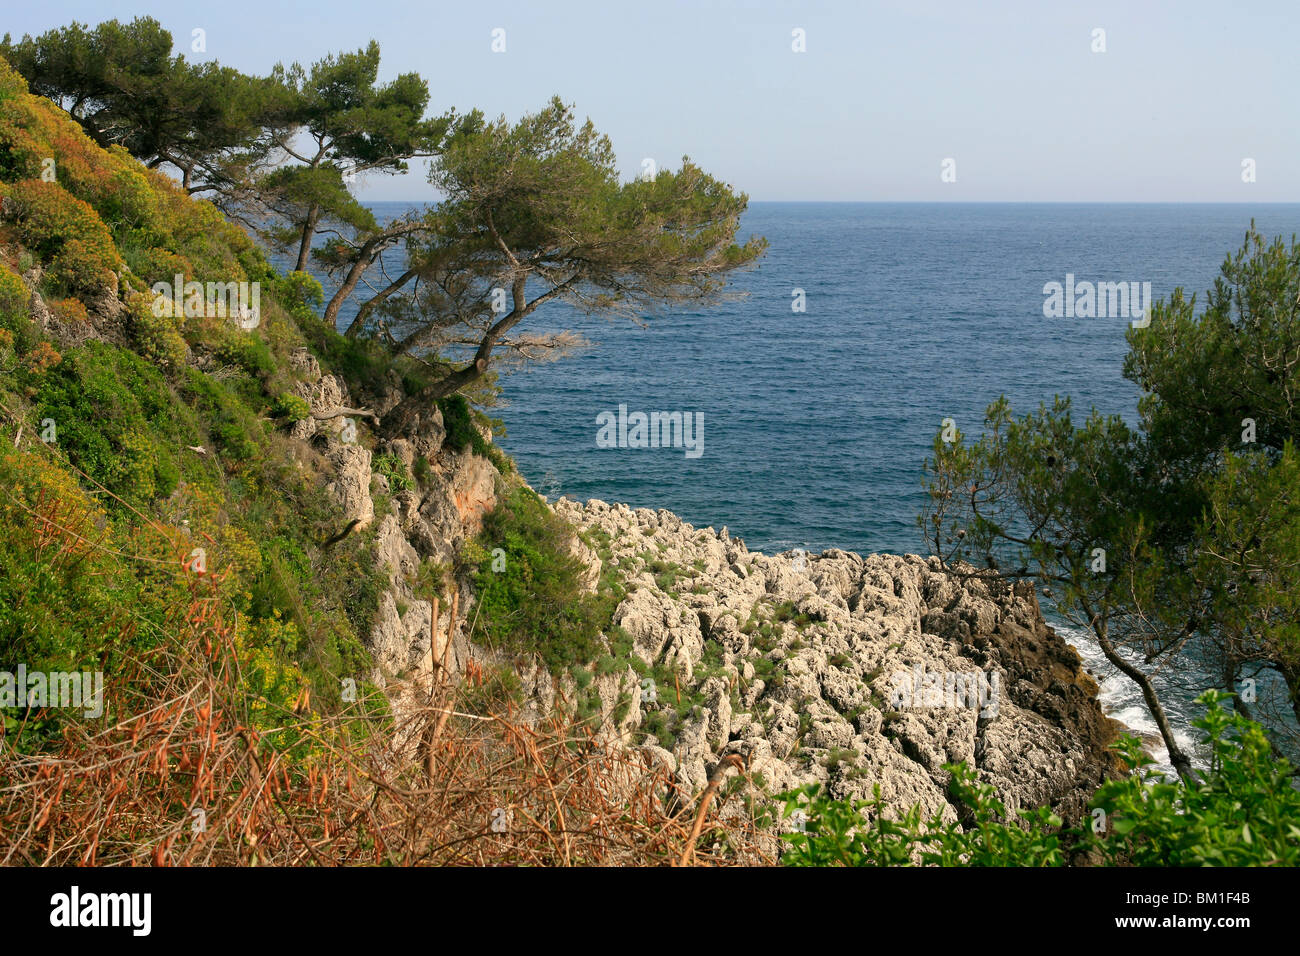 Euphorbia dendroides and Pinus sp. on the seashore Stock Photo